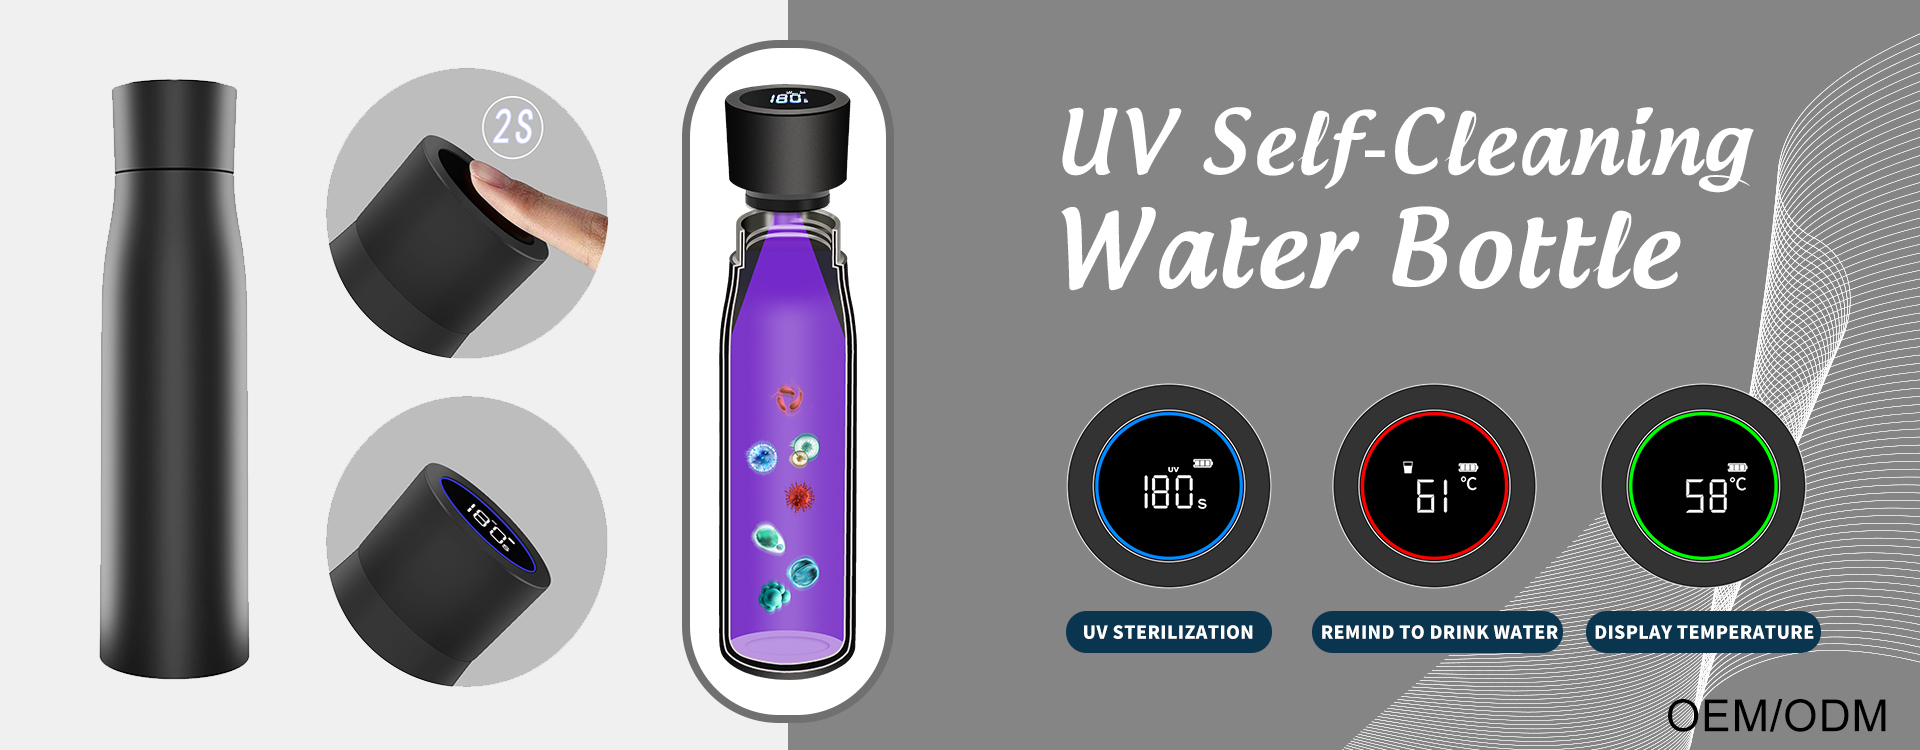 Smart UV self-cleaning water bottle